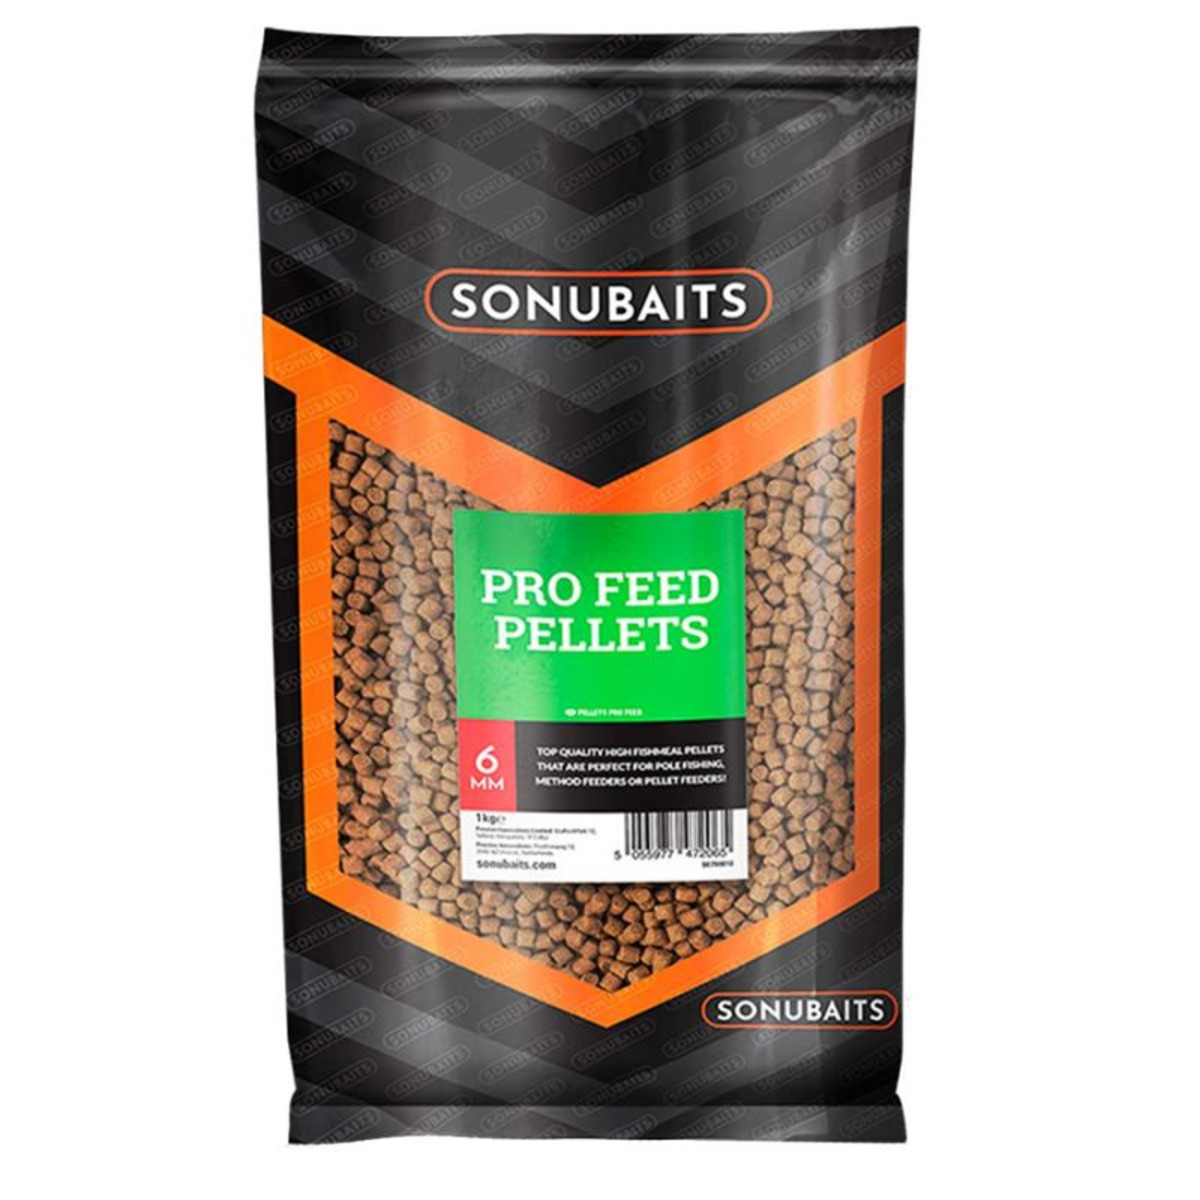 Sonubaits Pro Feed Pellets - 6 mm - 1 kg